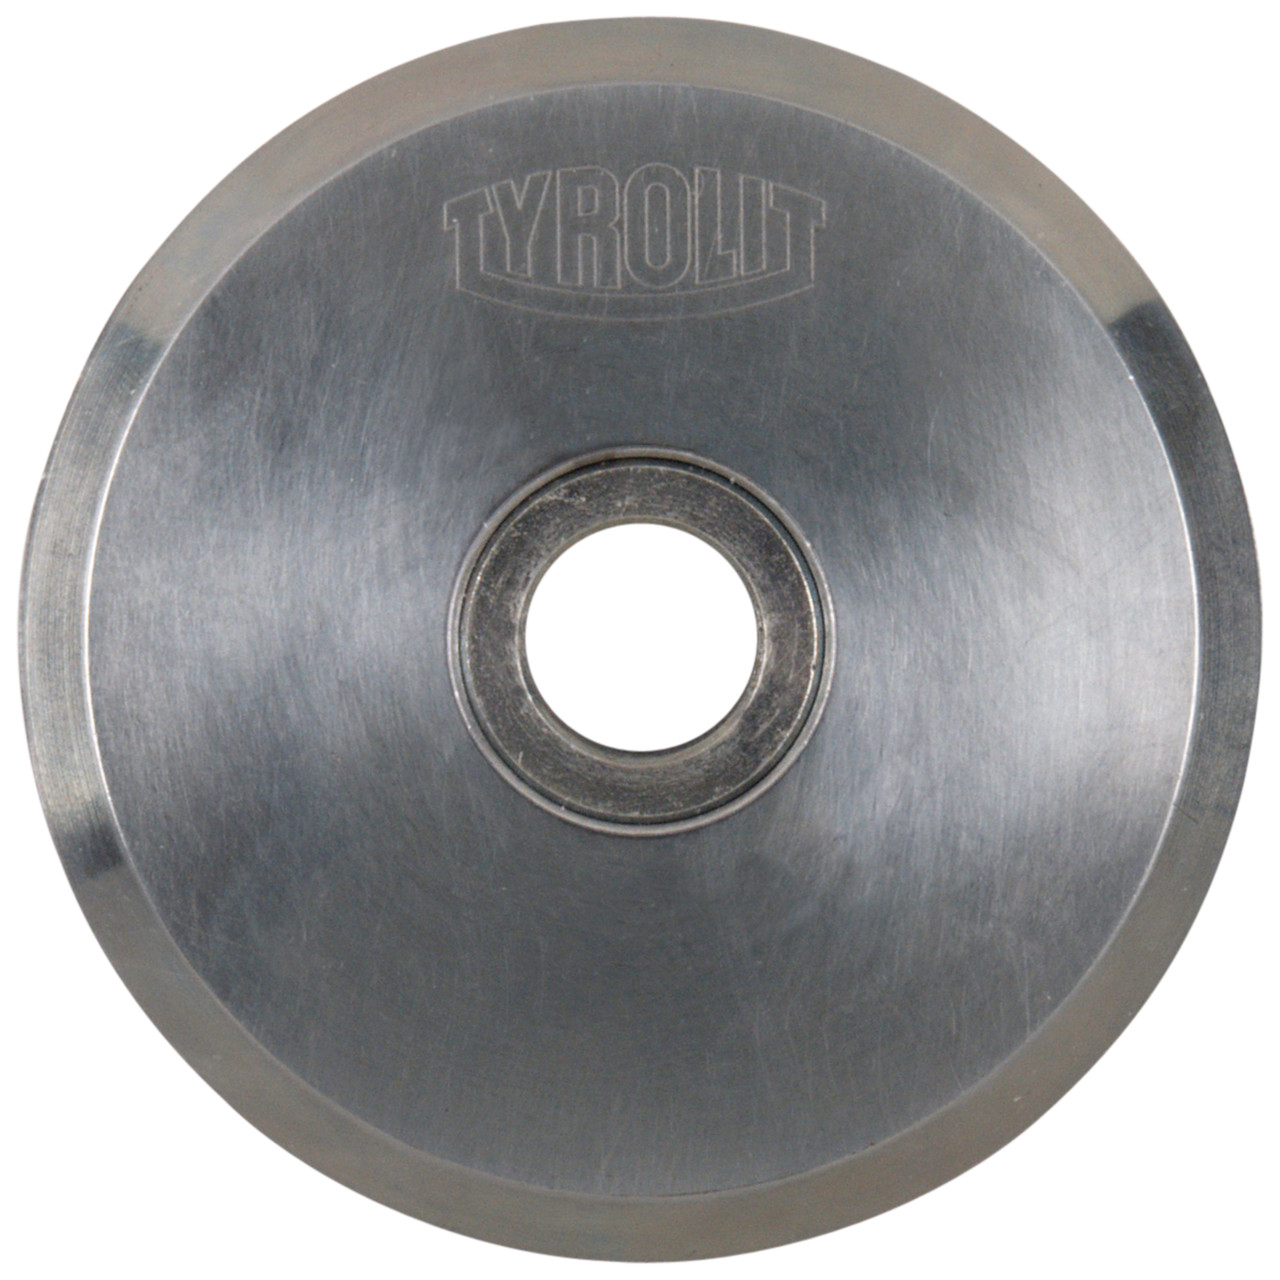 TYROLIT accesorio D 76 Para discos de corte, forma: 100SFL, Art. 614644